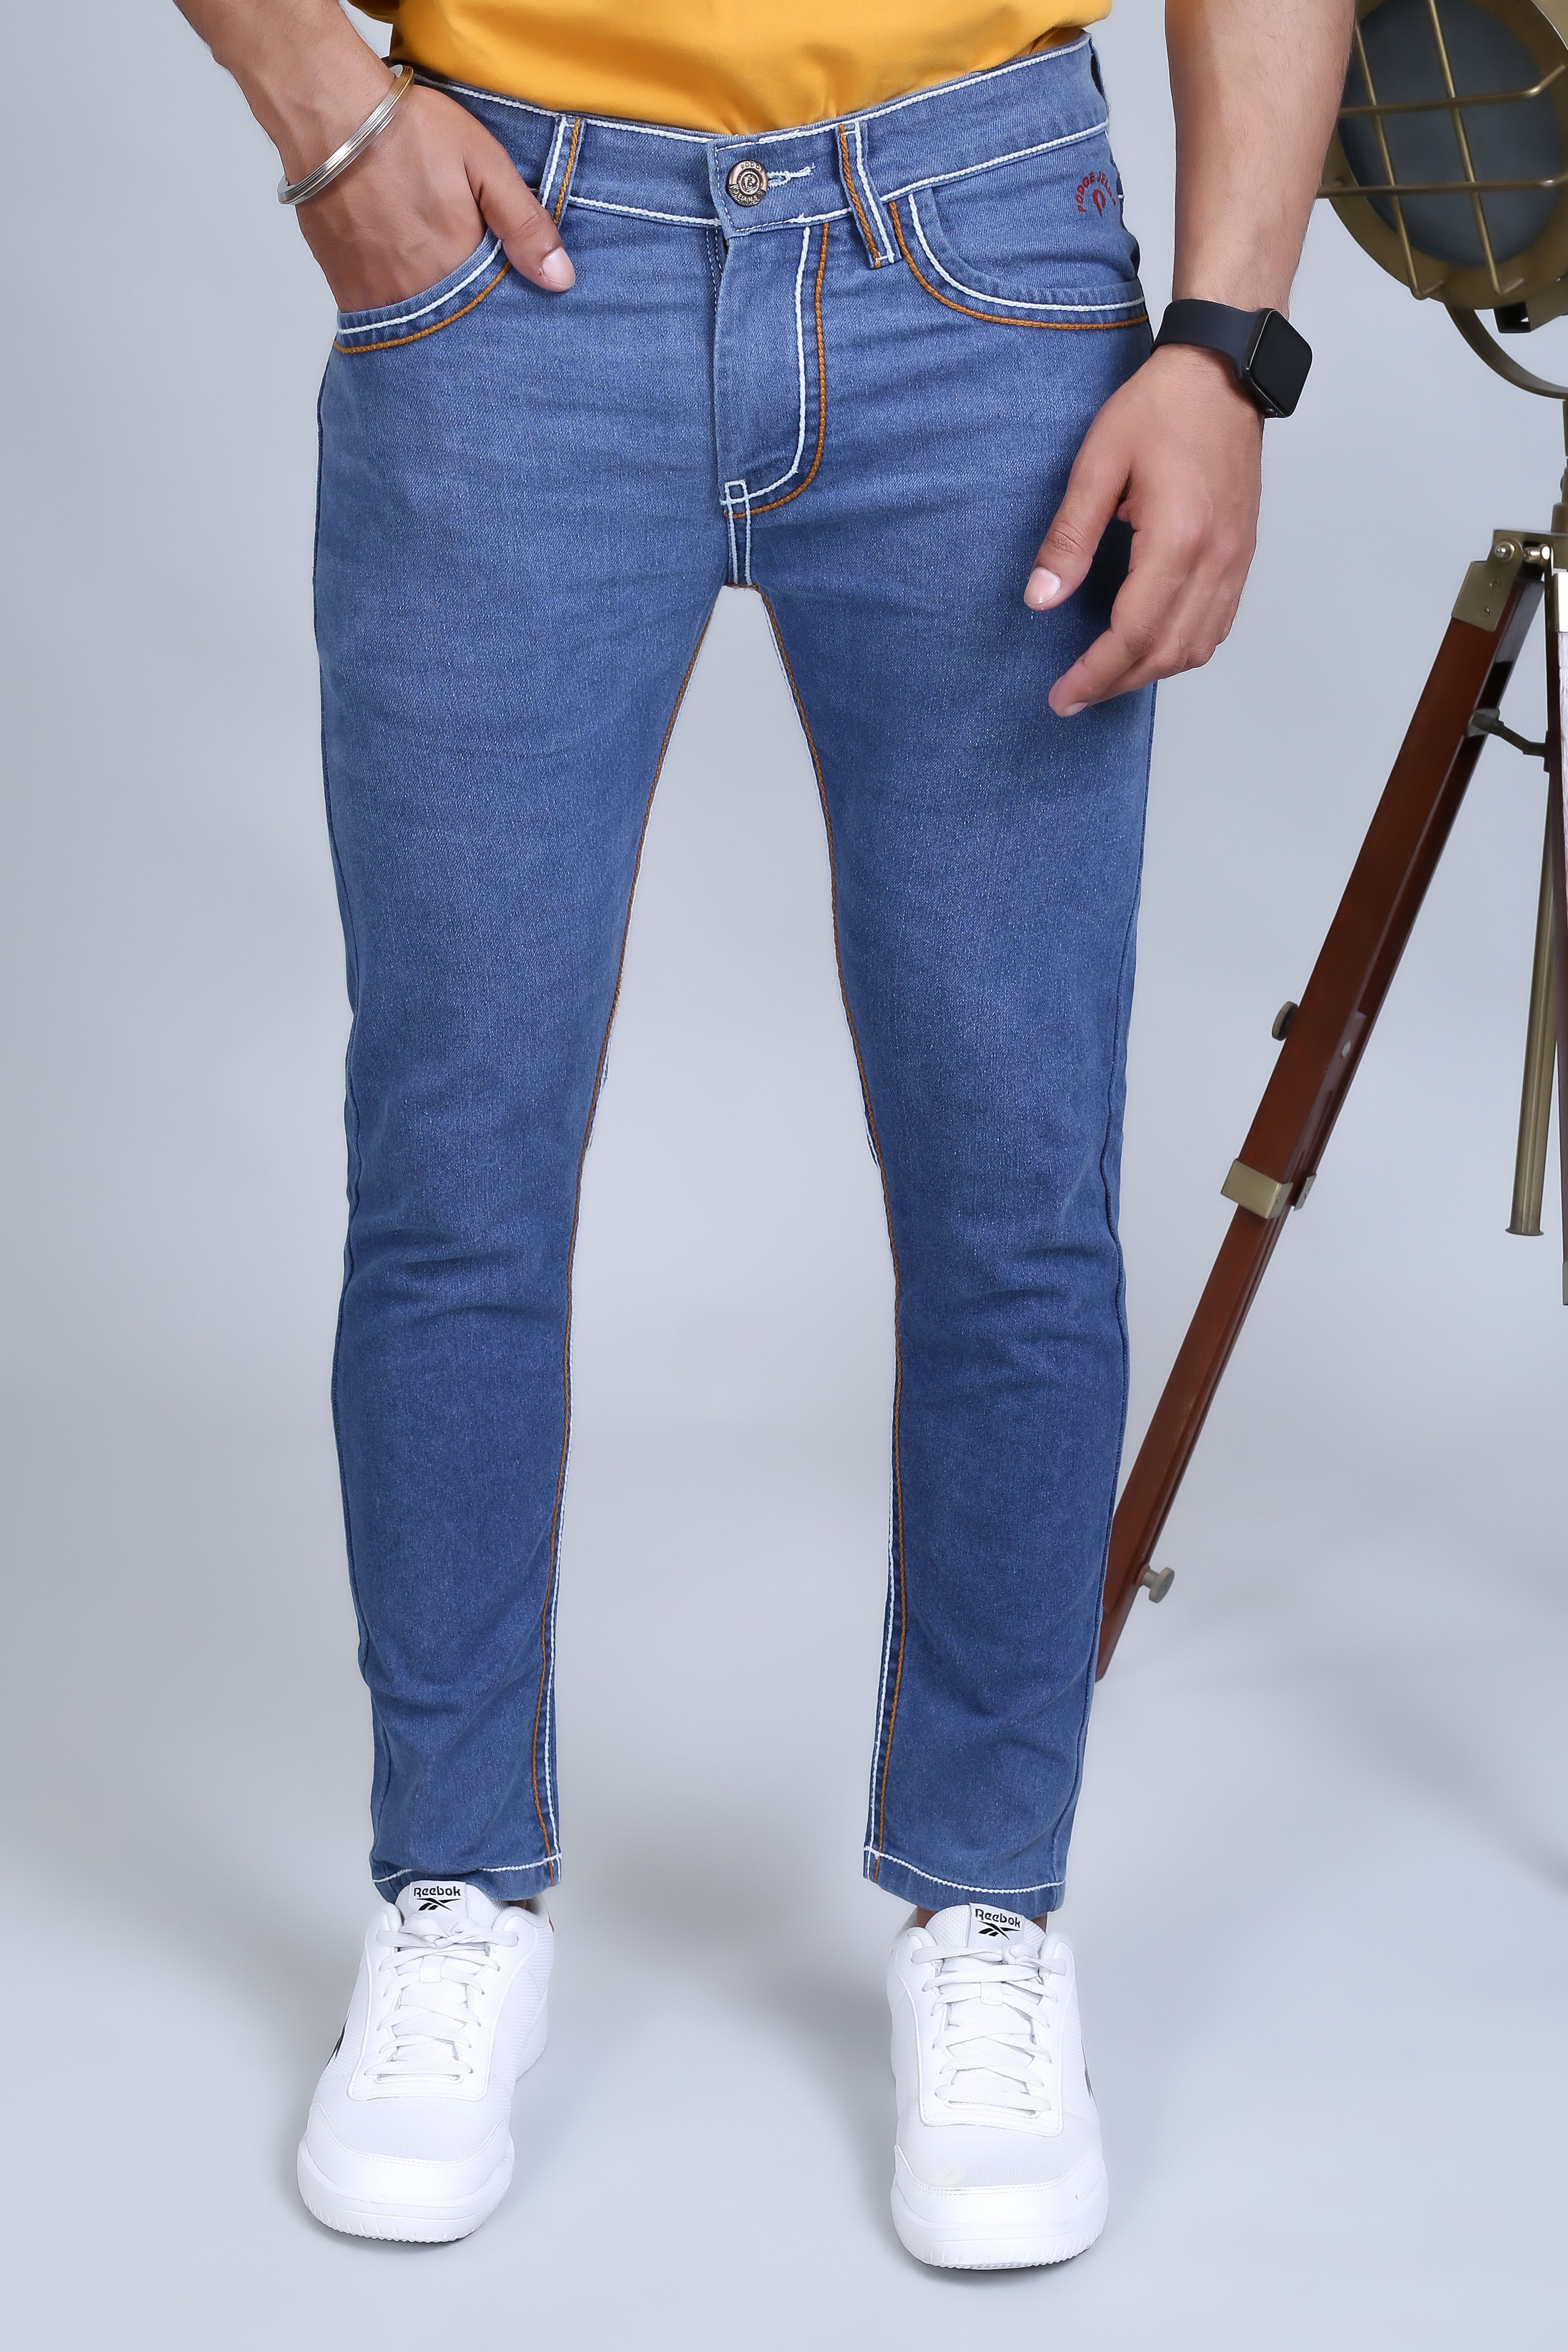 PODGE Slim Fit Basic Men's Jeans - Dark Blue ( Pack of 1 )